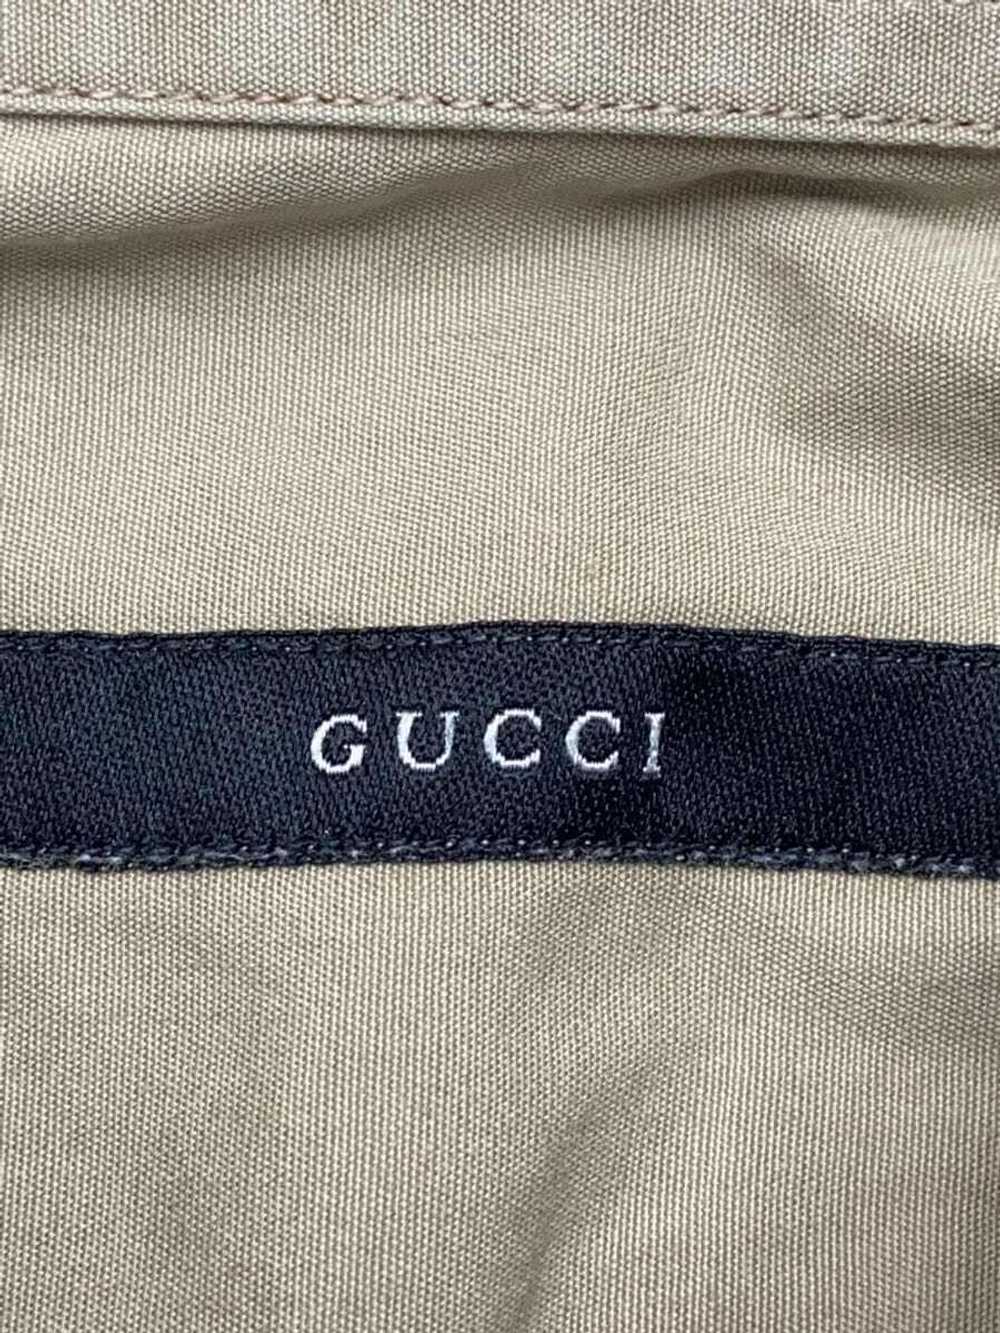 Gucci Long Sleeve Shirt/40/Cotton/Beige/303-0550-… - image 3